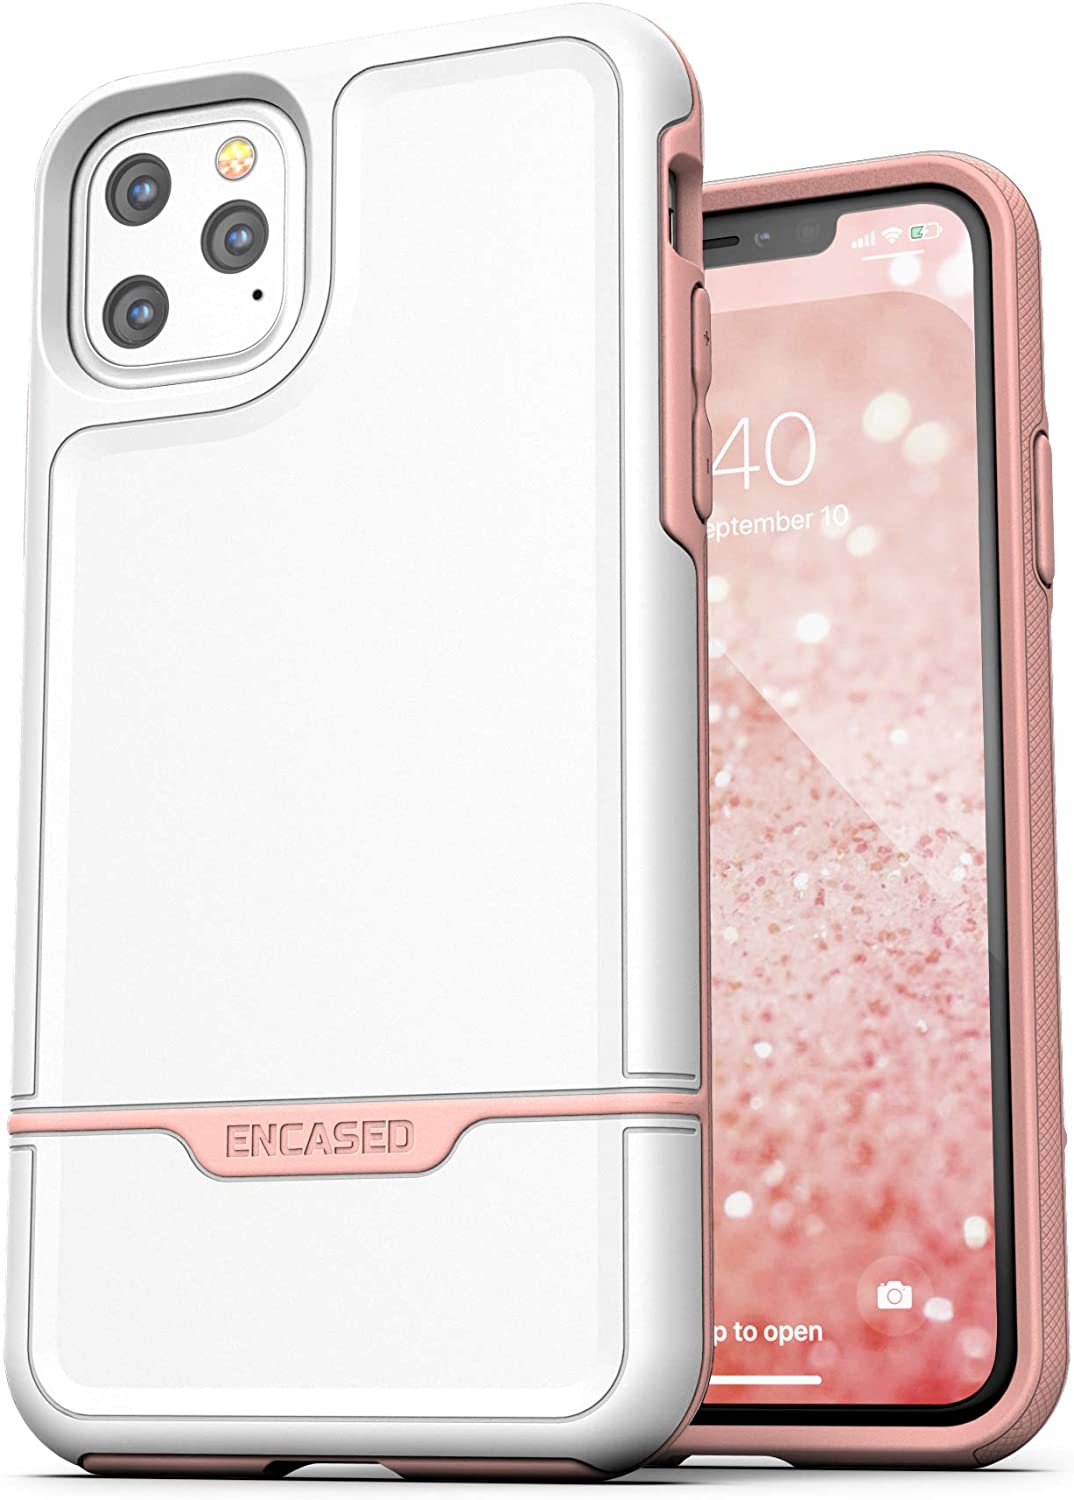 Encased Heavy Duty iPhone 11 Pro Max Case off white - e4cents